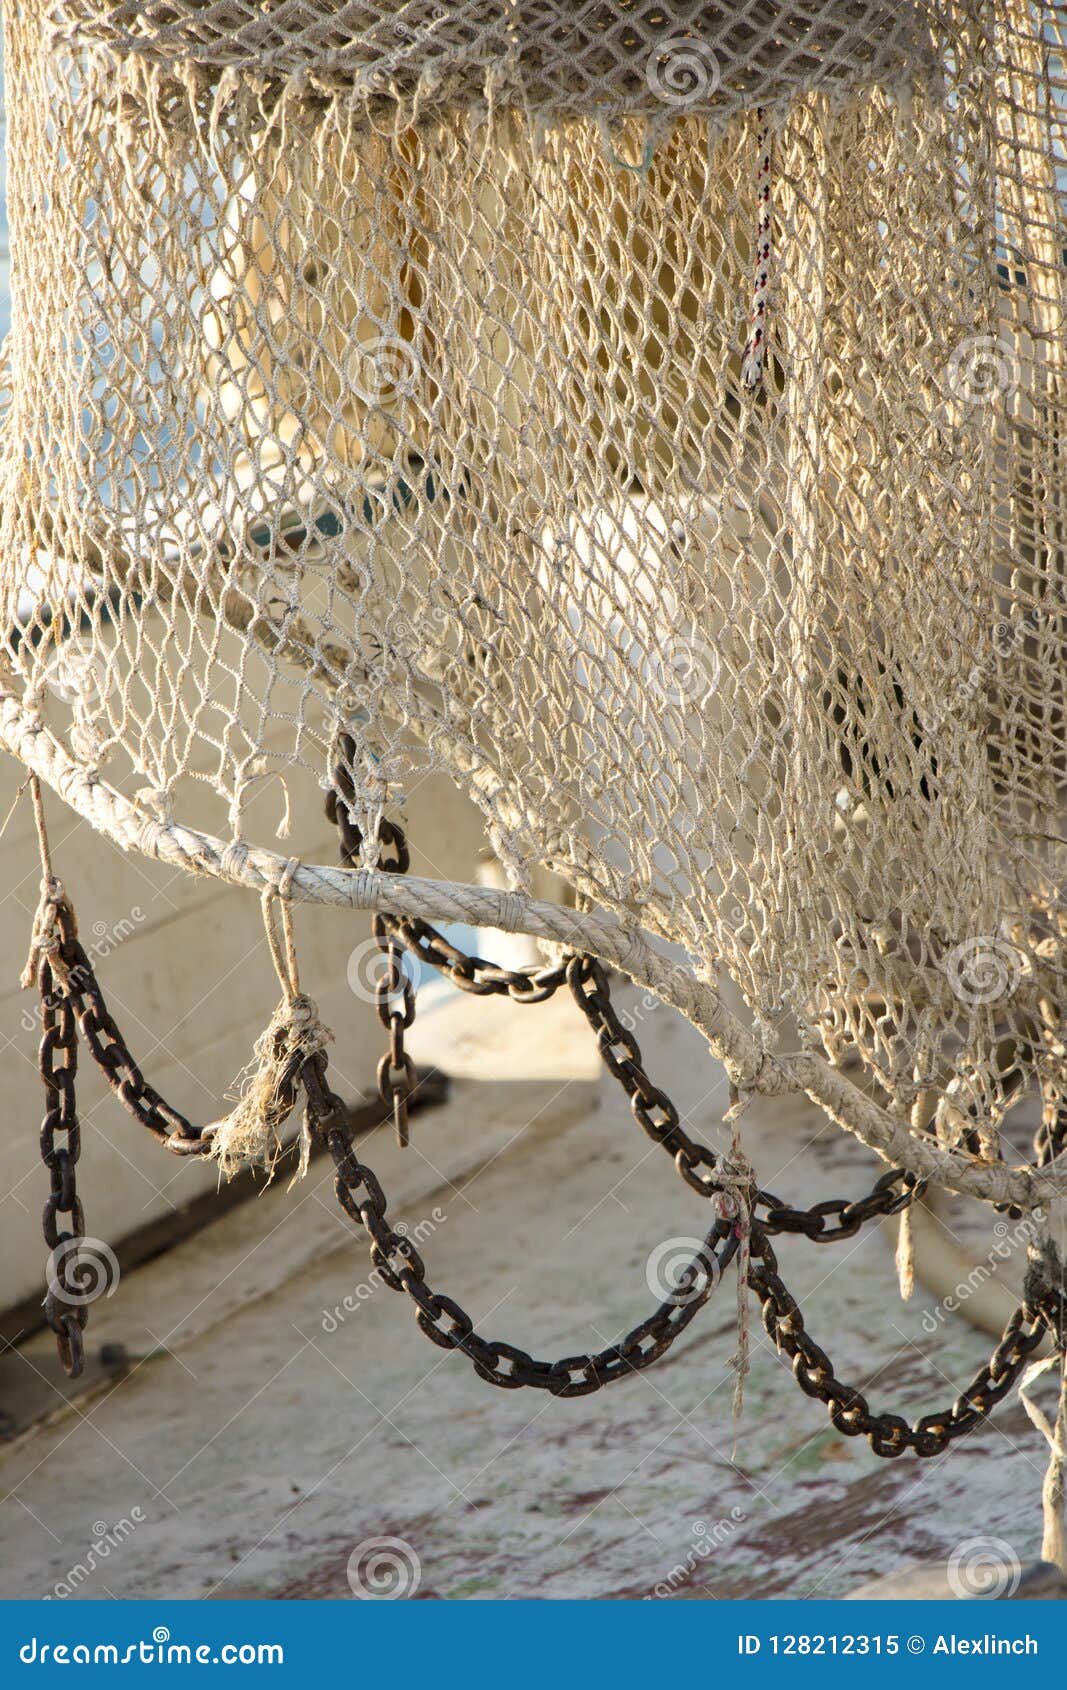 Fishing Trawl Net in a Trawler Boat Stock Image - Image of fishing, ship:  128212315